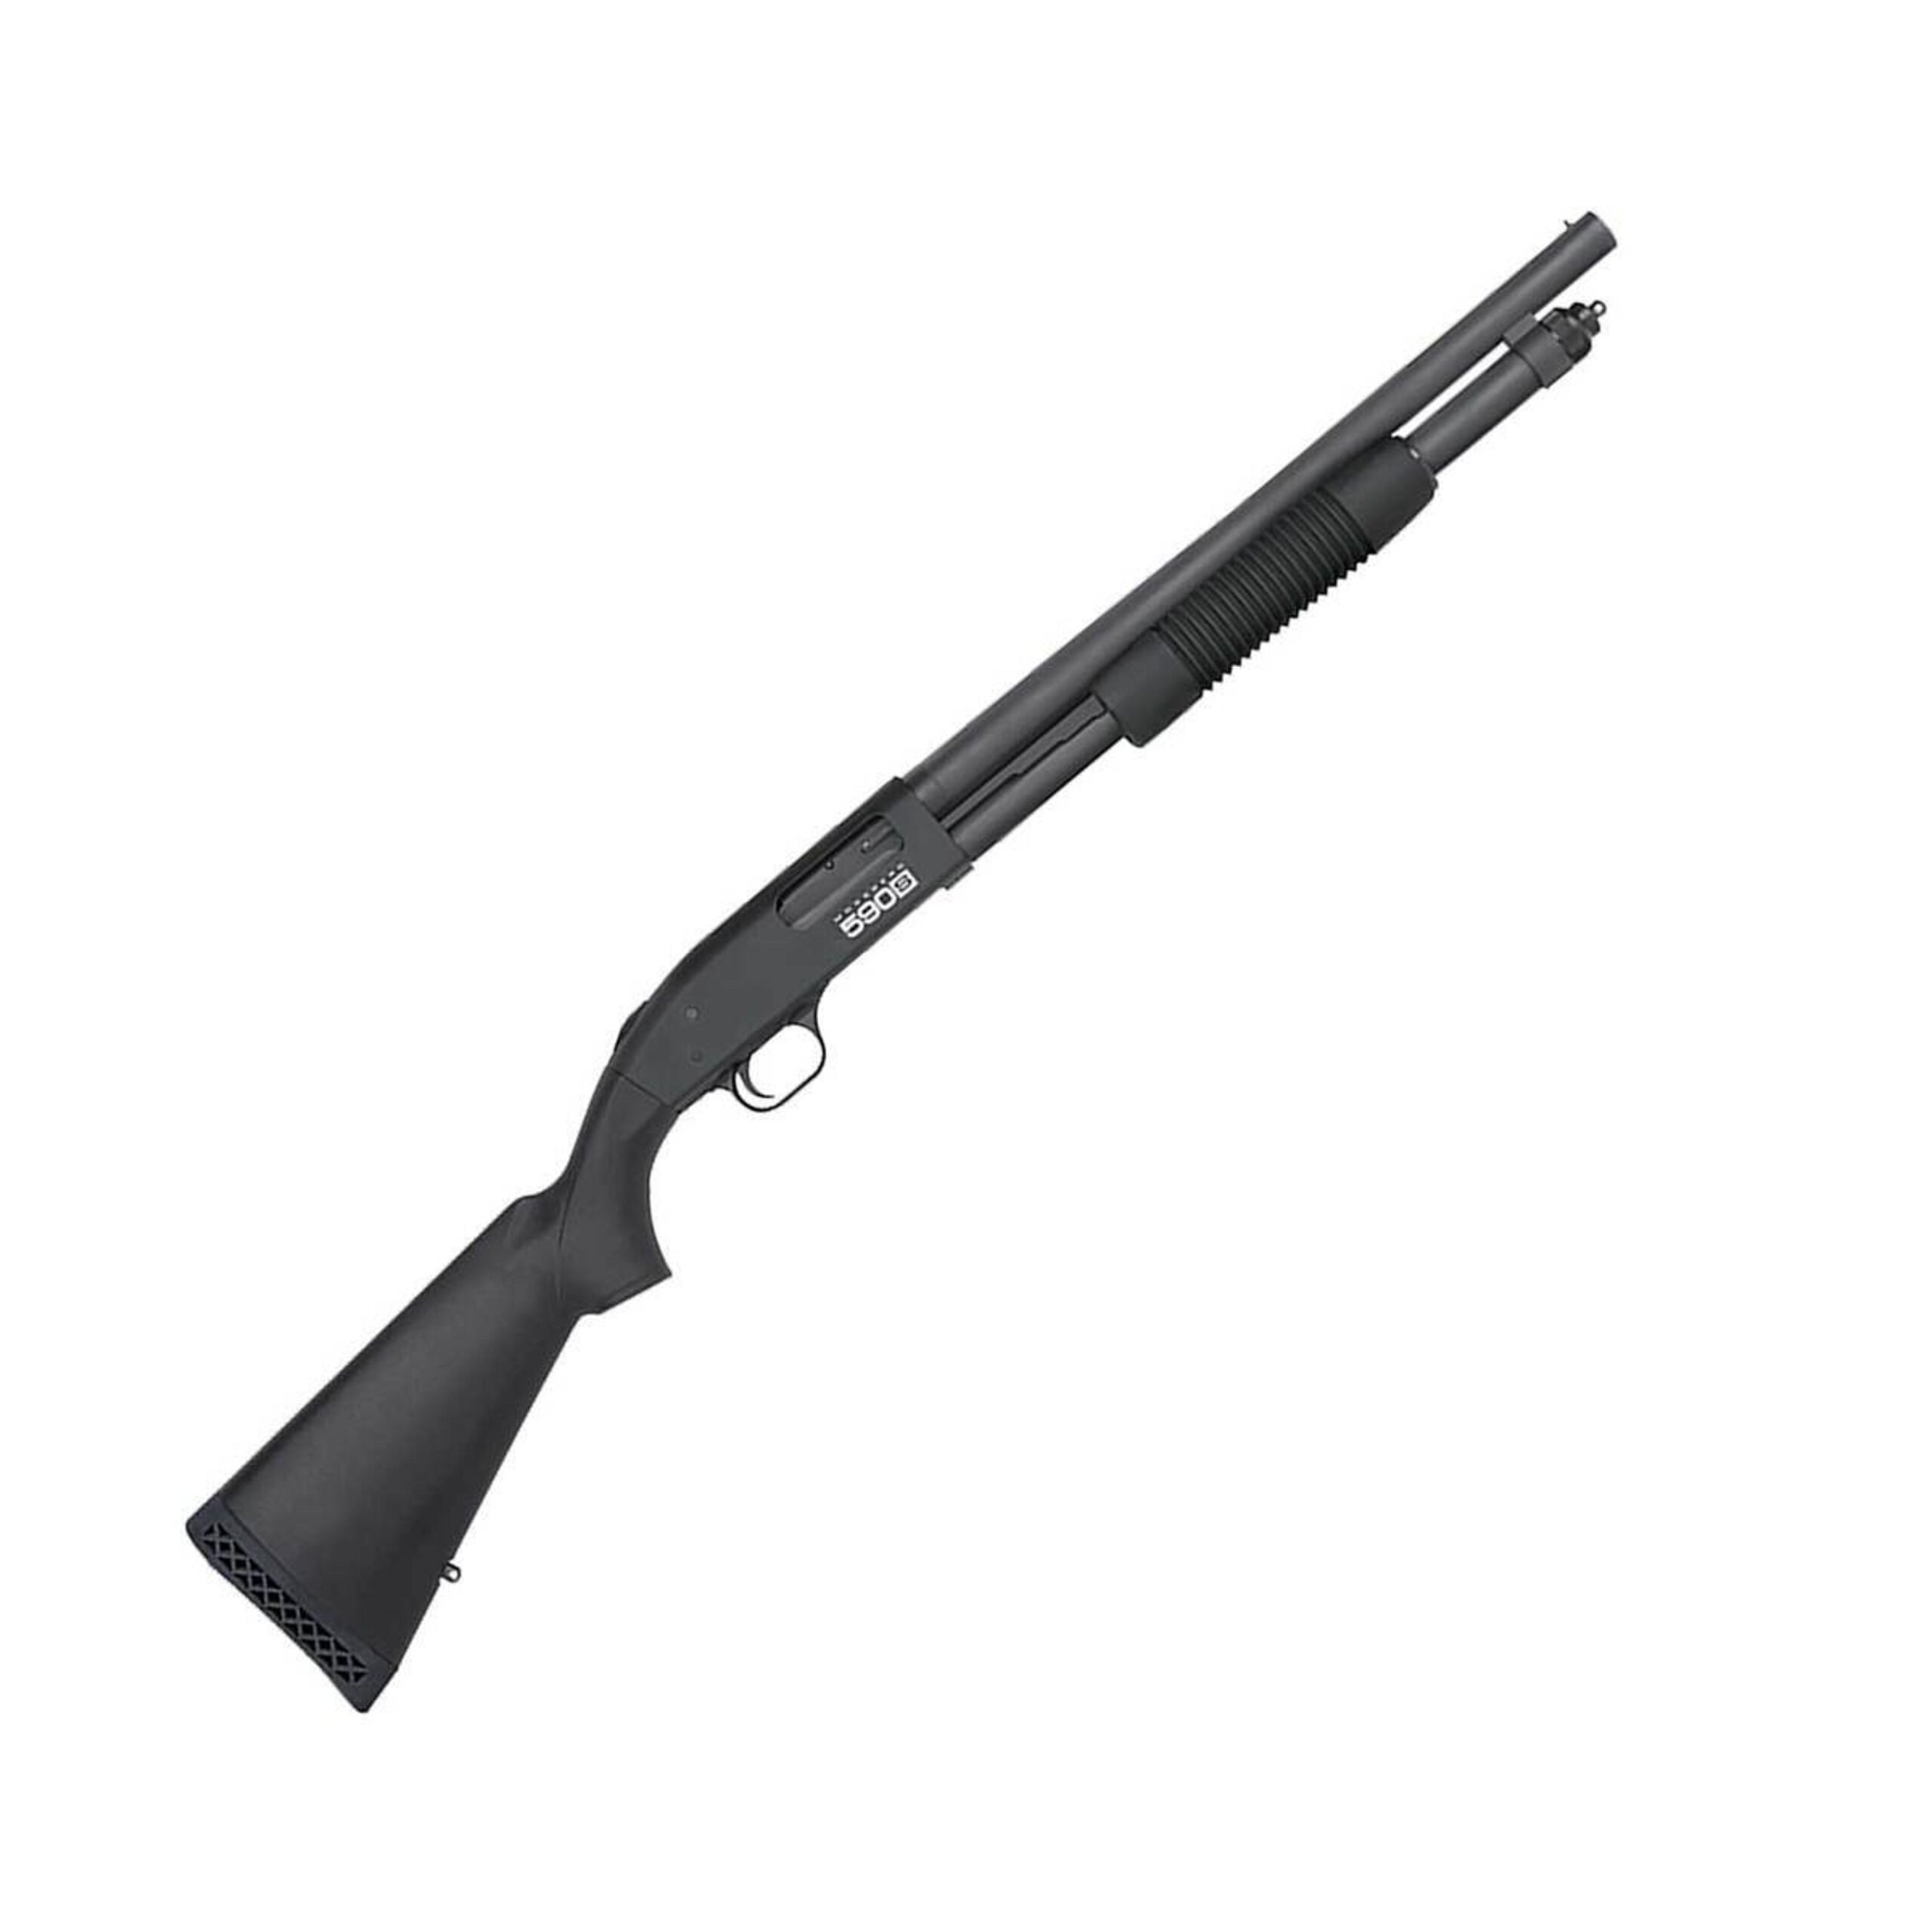 Mossberg 51604 590S Pump Action Shotgun, 12 GA, 20" Bbl, Black Synthetic Stock, Optics Cut, 13+1 Rnd, 0902-1814